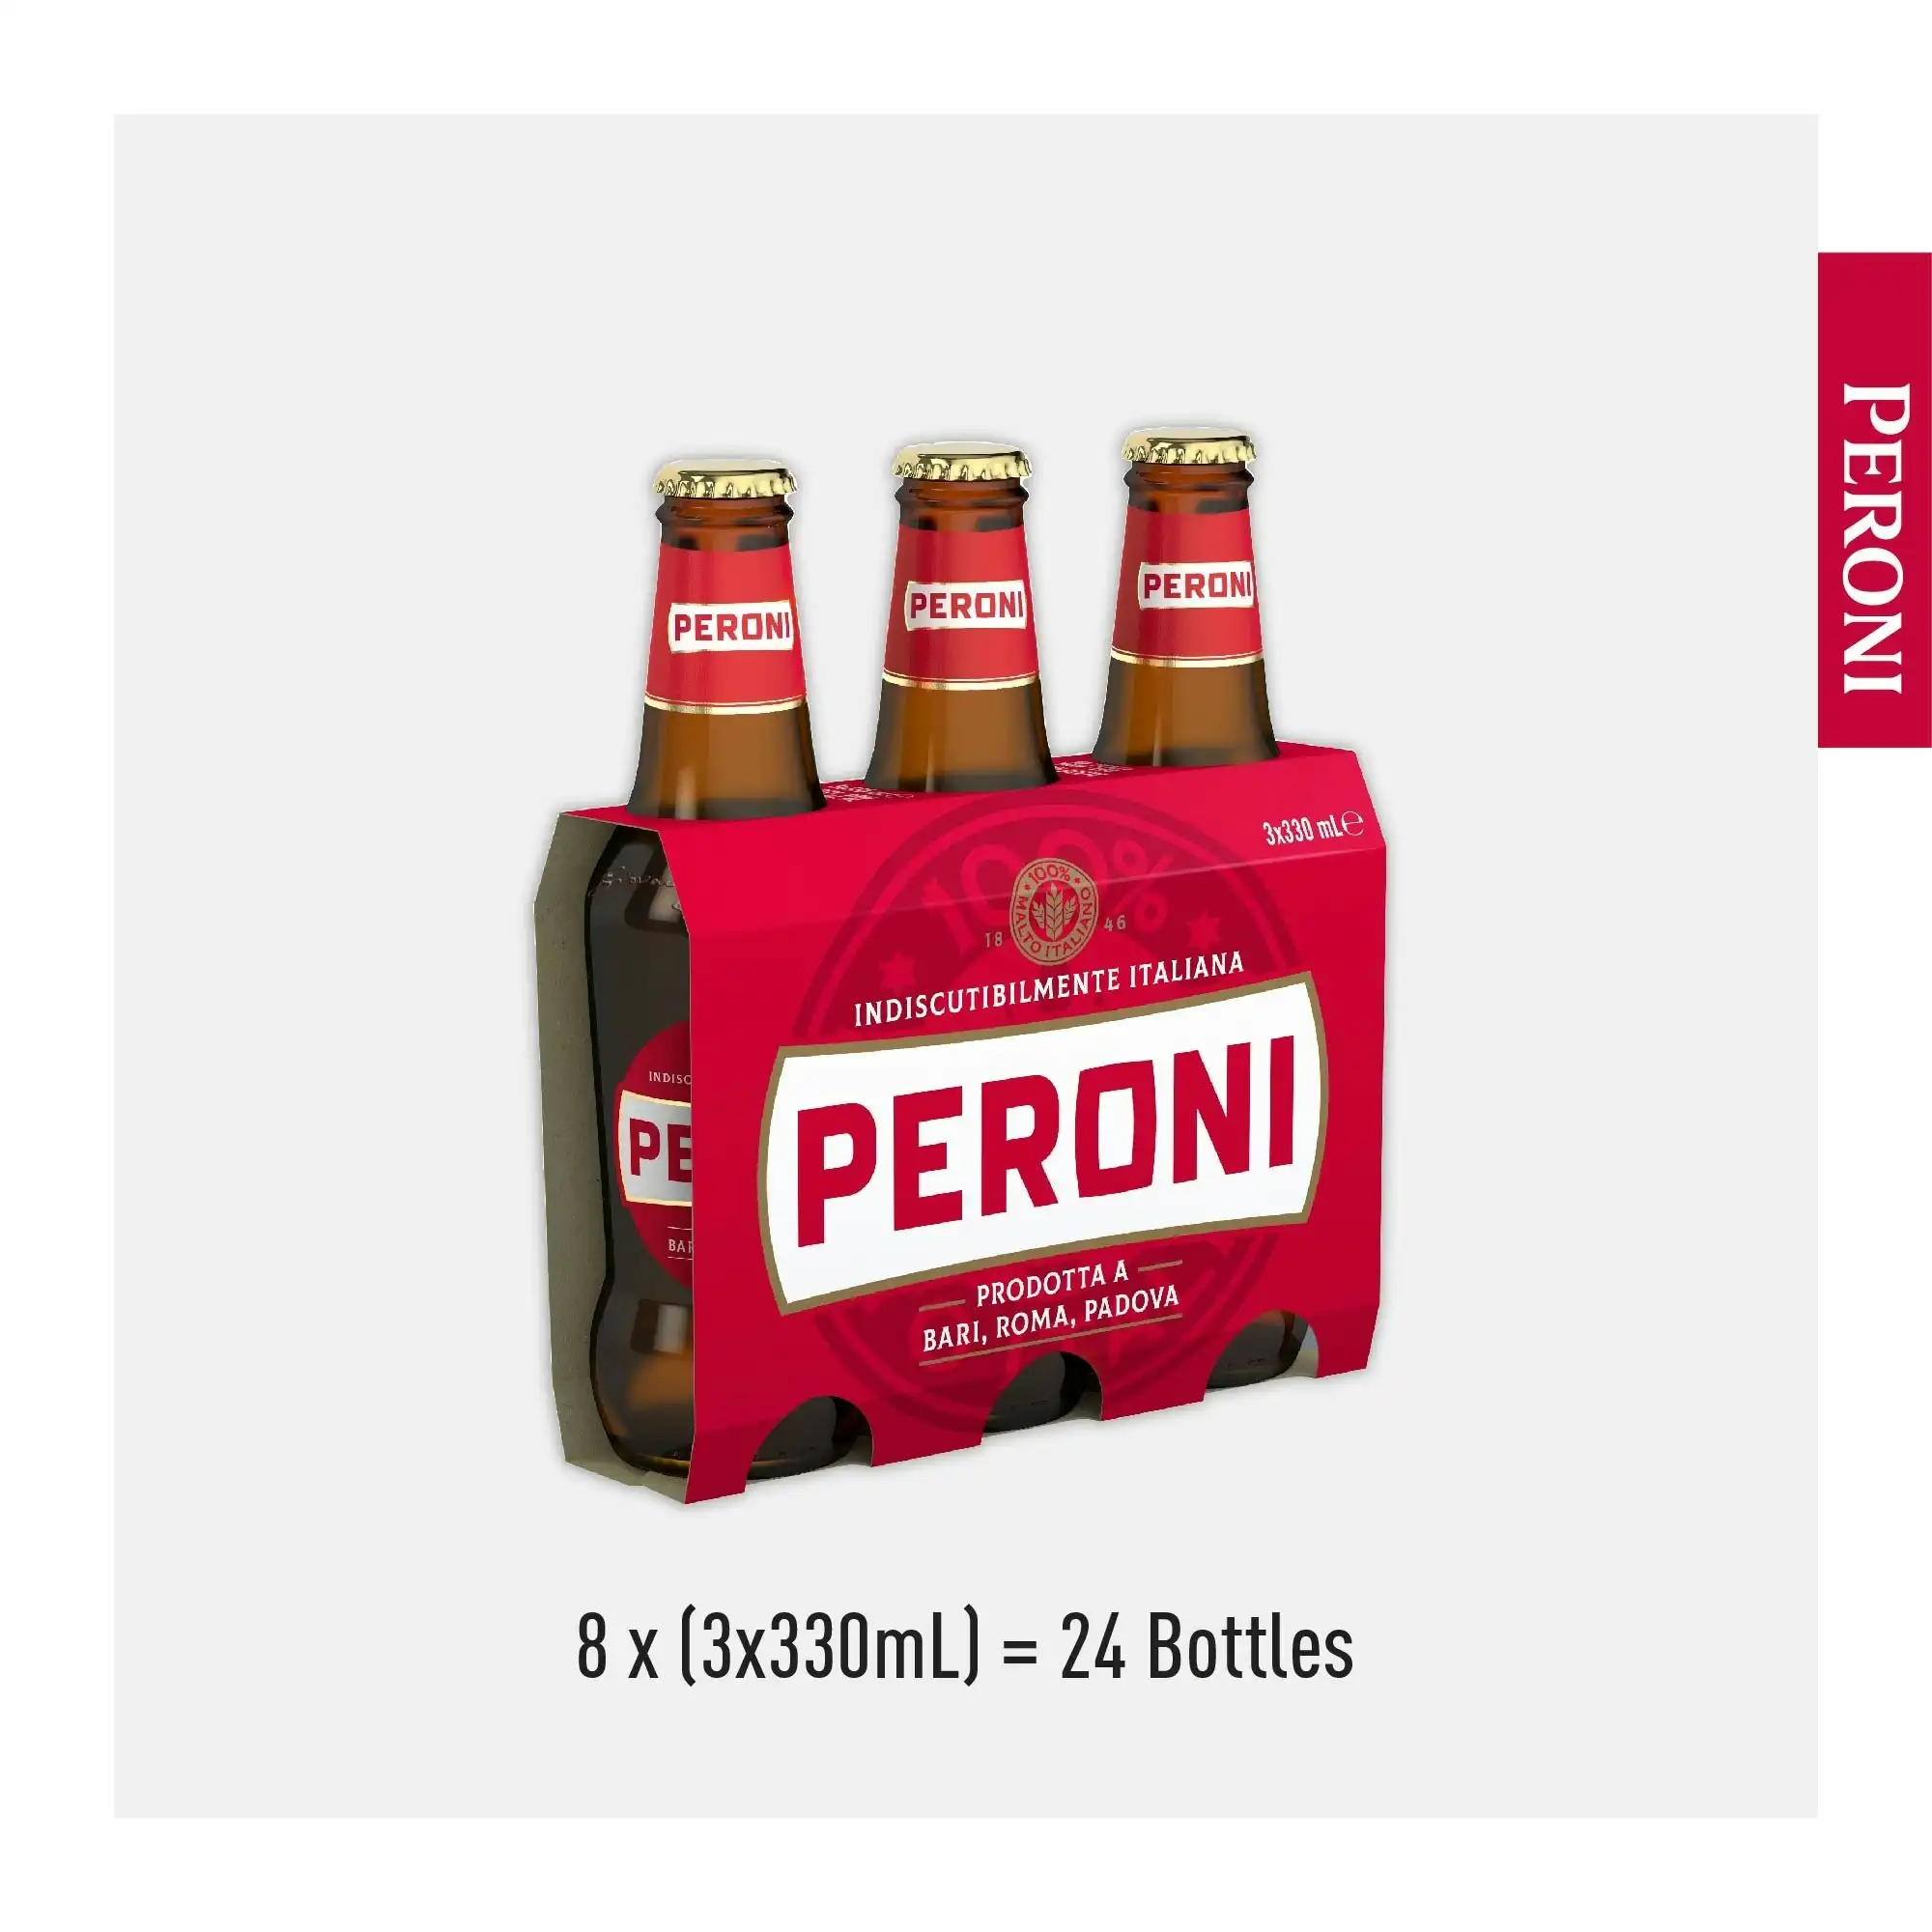 Peroni Red Beer Case 24 x 330mL Bottles